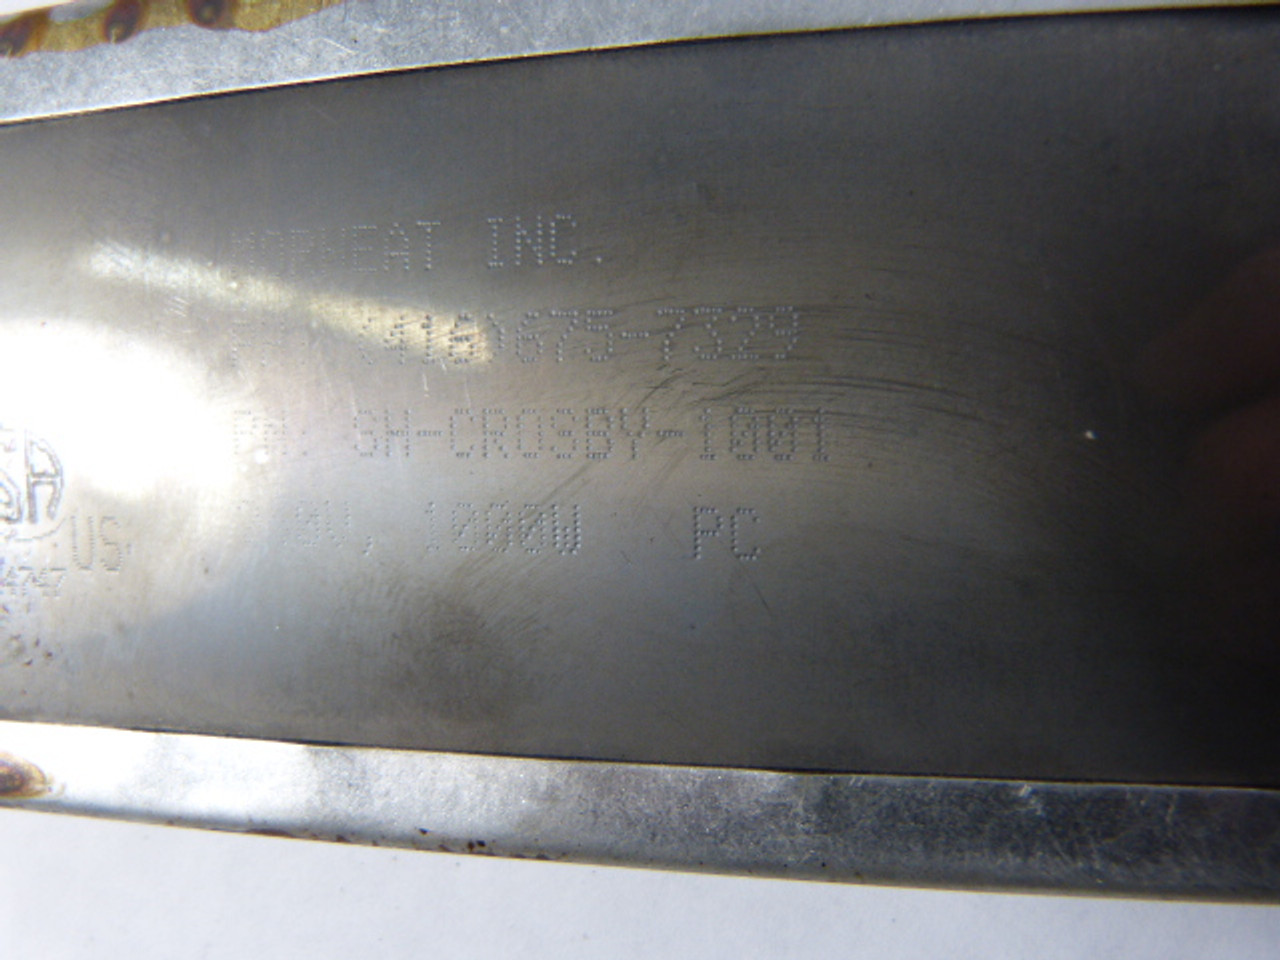 Morheat SH-CROSBY-1001-NP Micra Strip Heater 240V 1000W USED